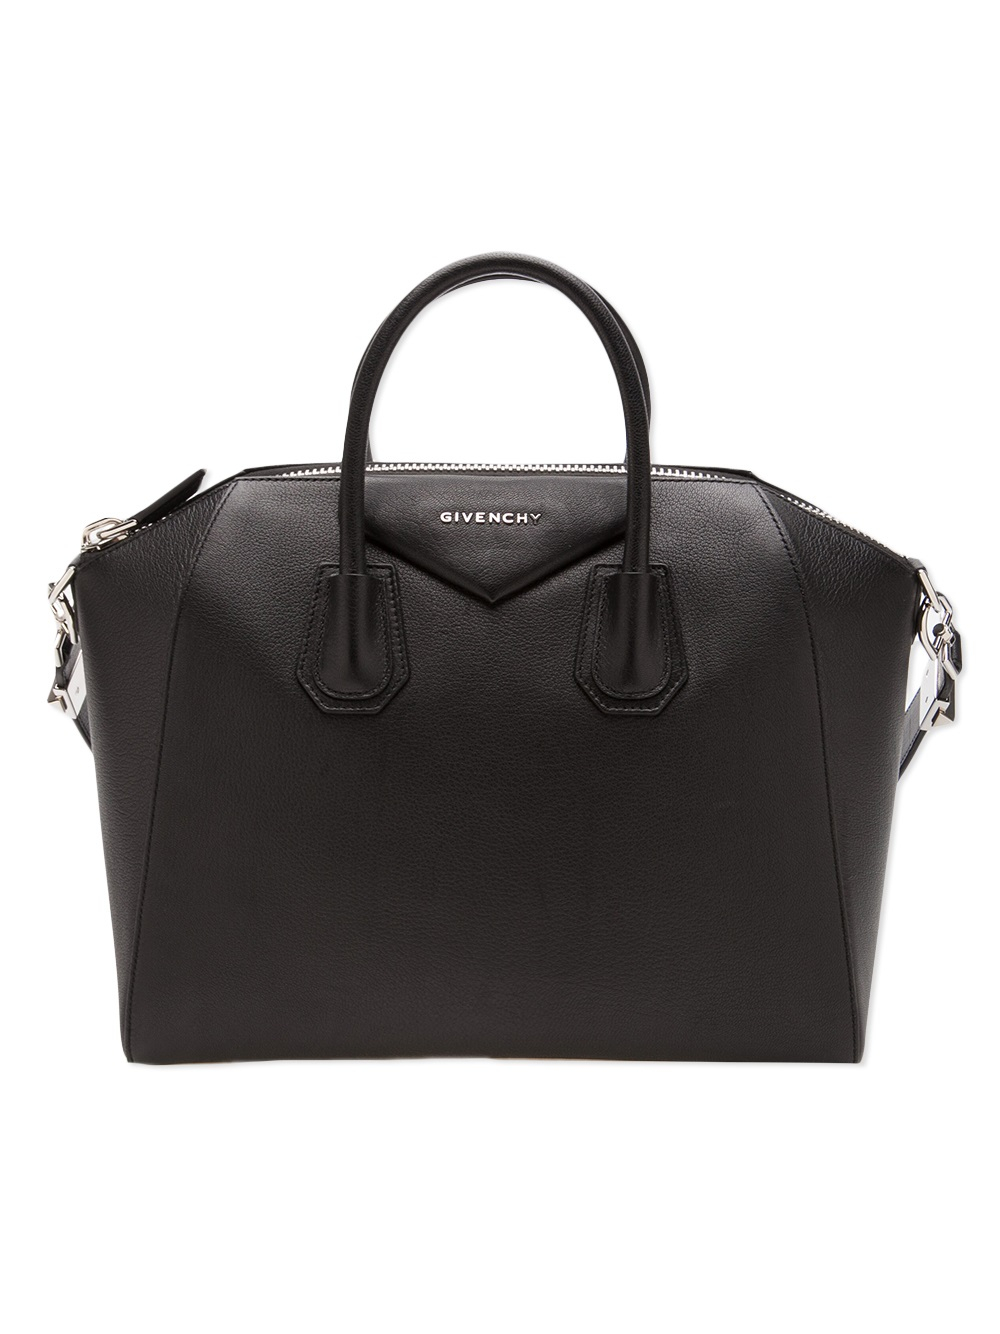 Givenchy Antigona Medium Bag in Black - Lyst